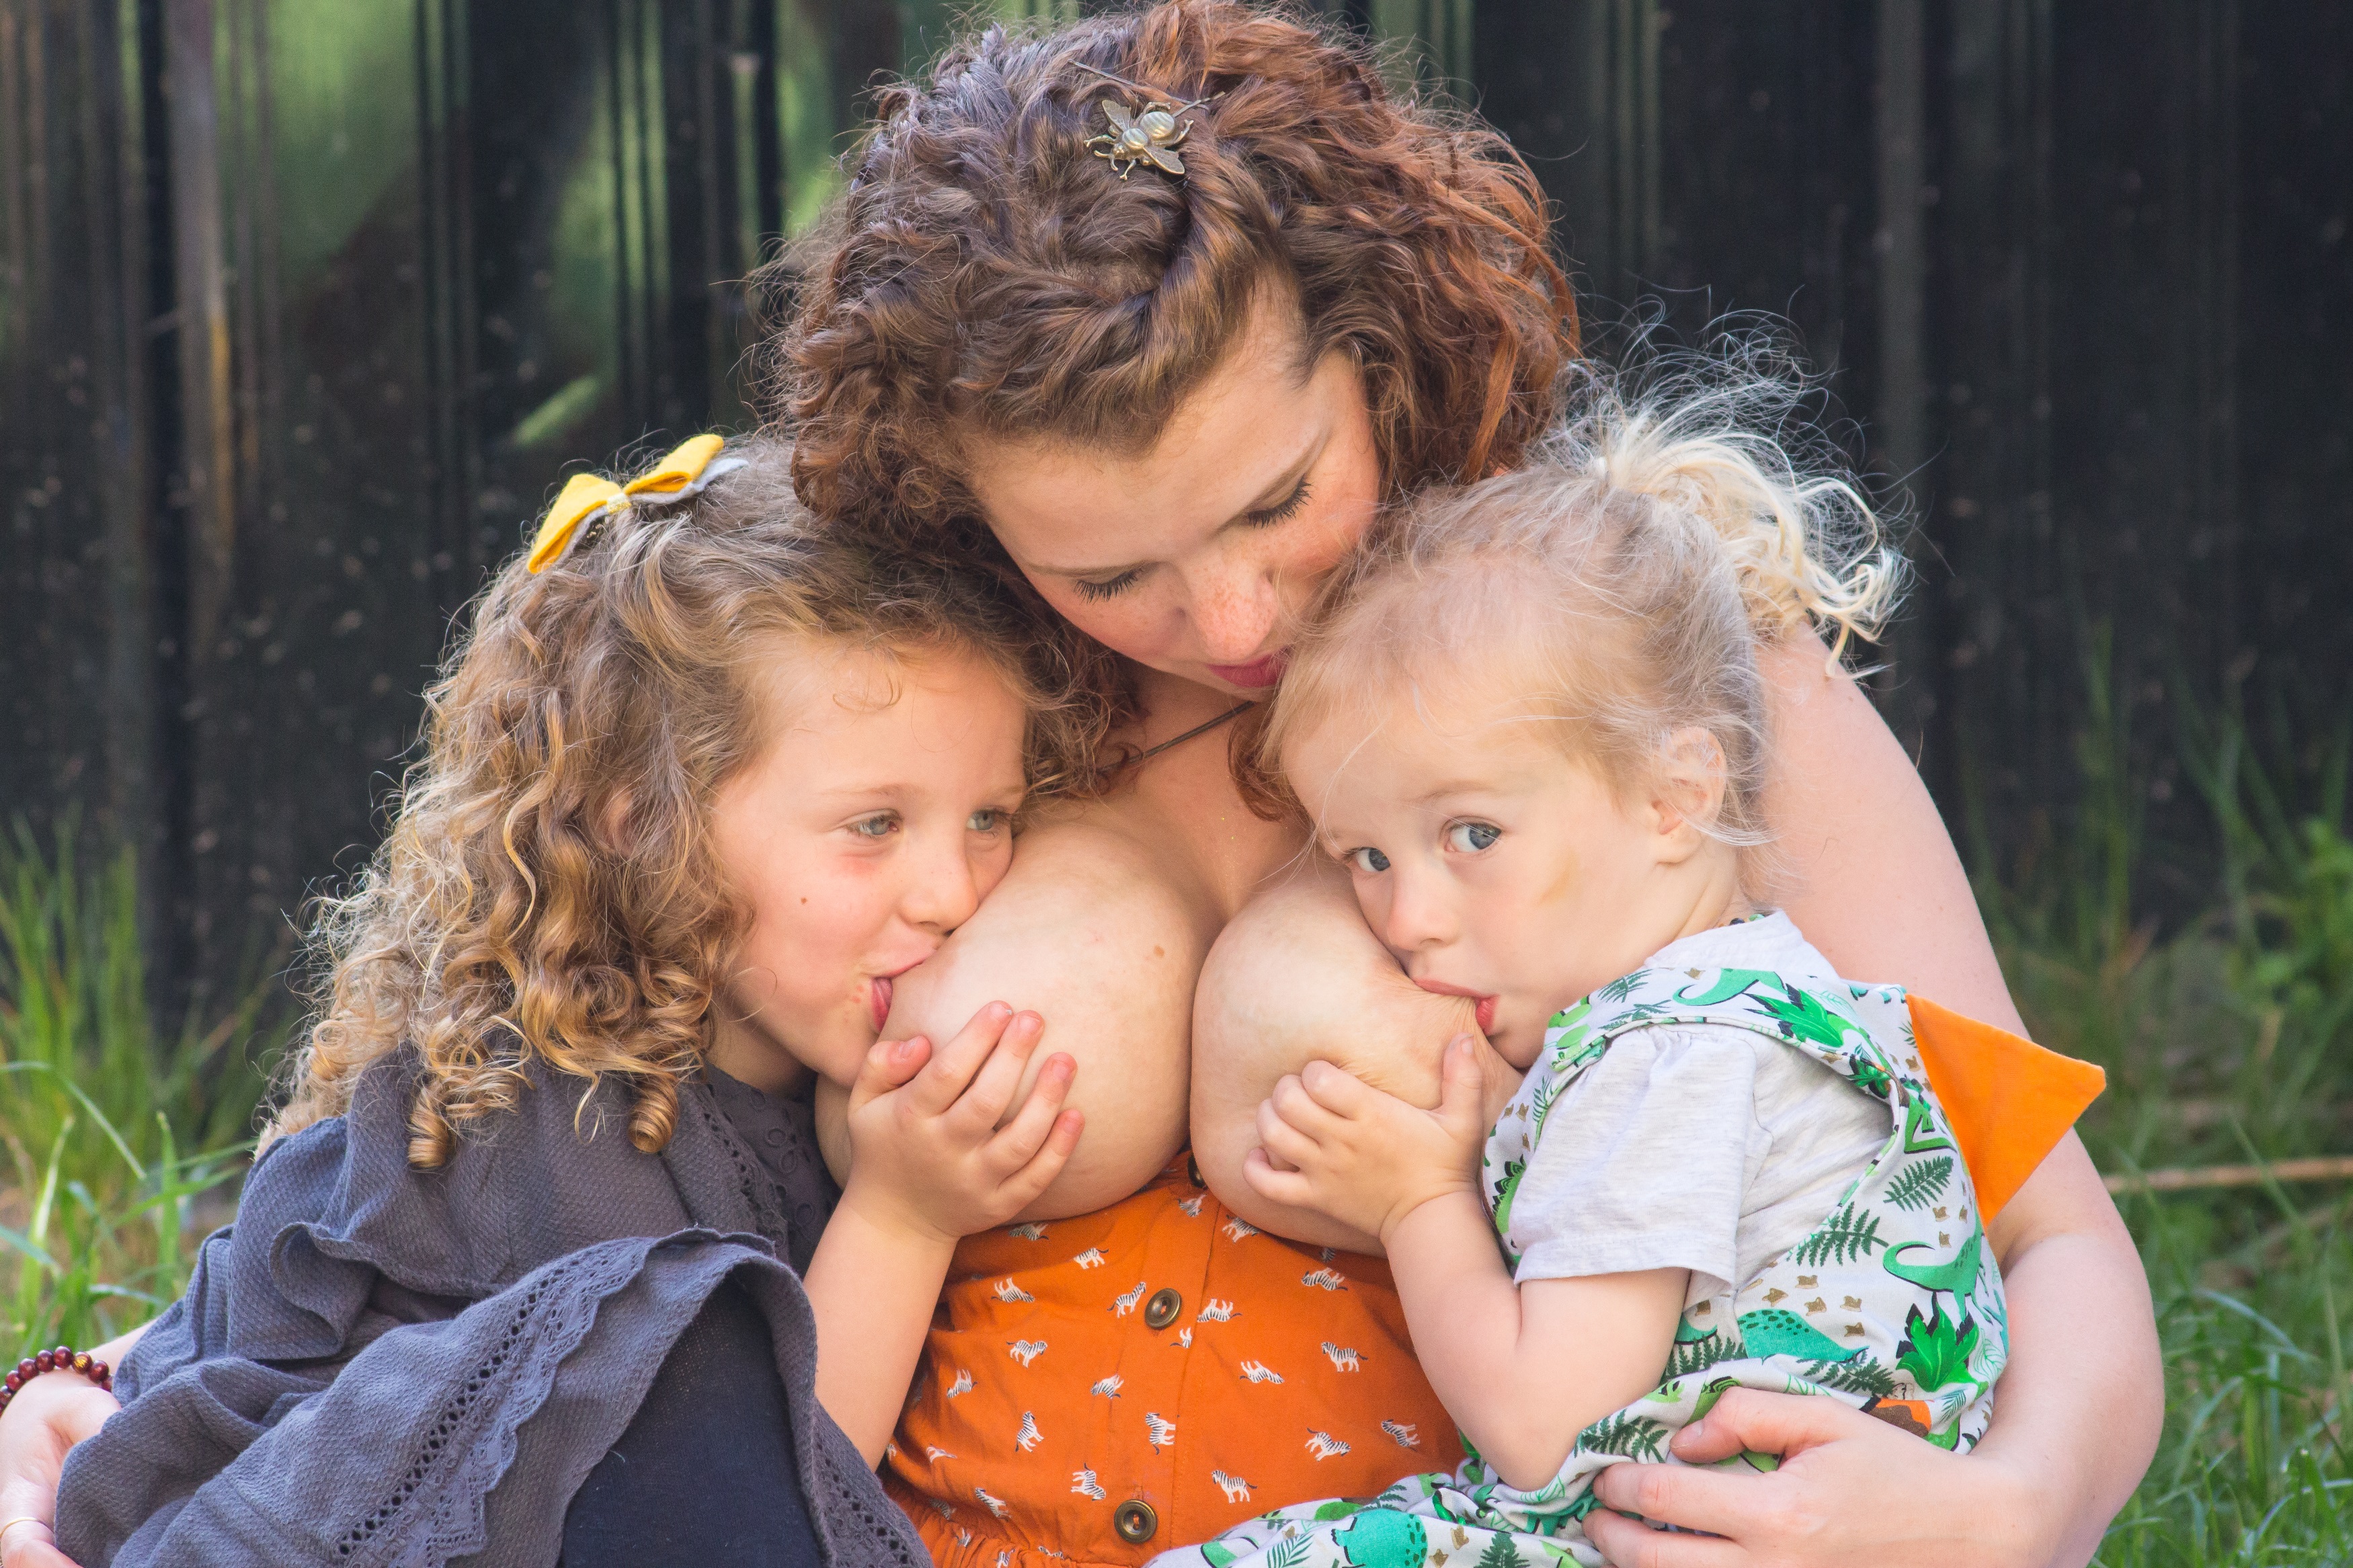 donna blickenstaff recommends Mother Breastfeeding Adult Daughter